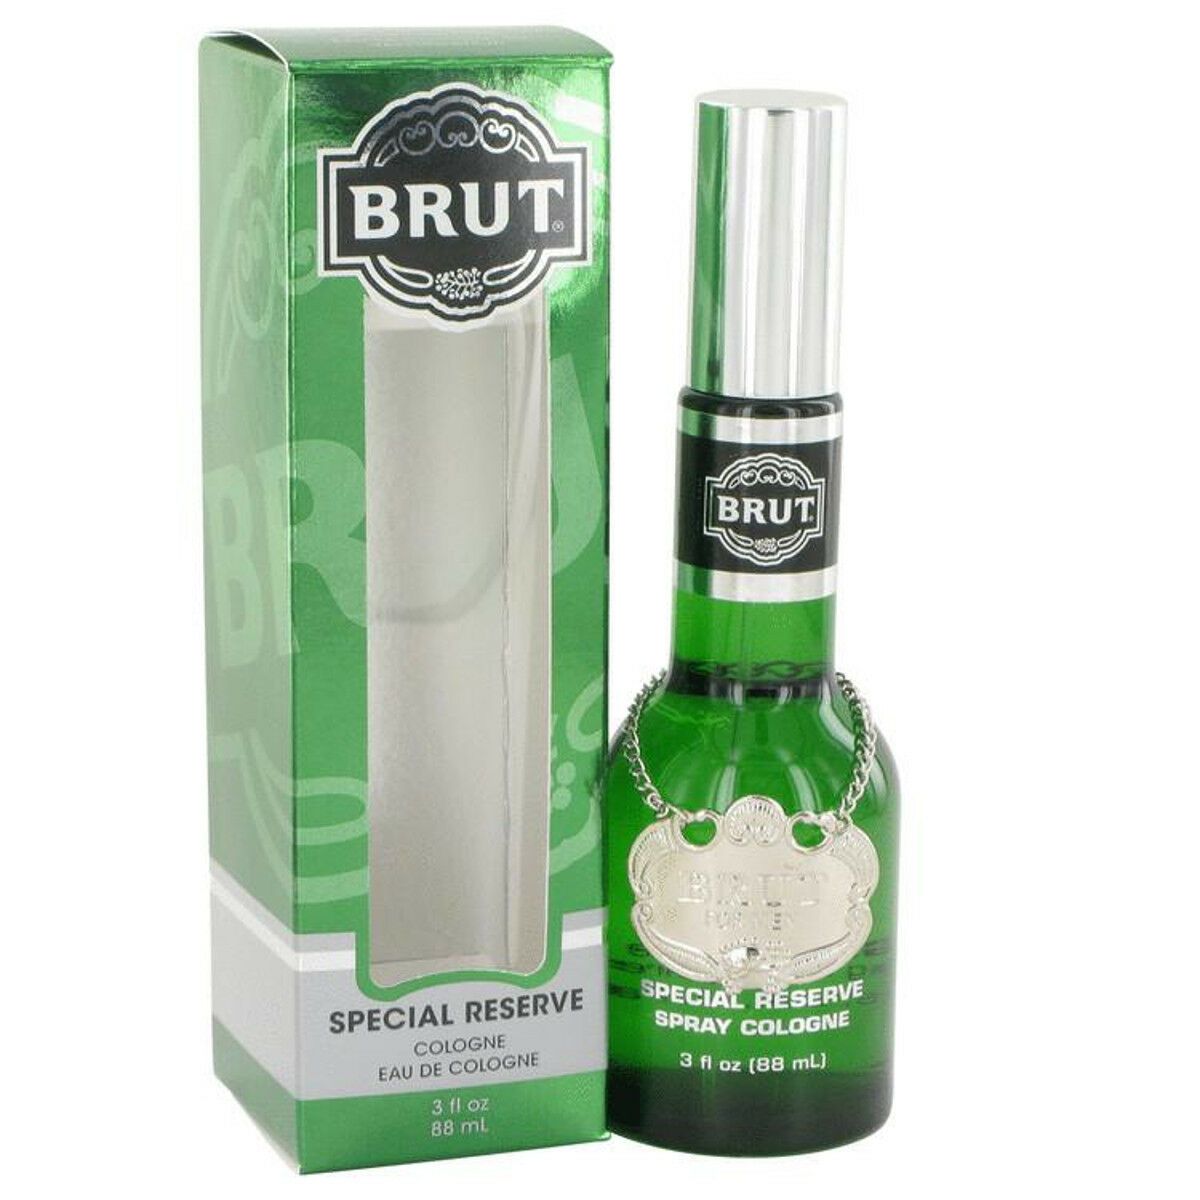 FABERGE - Brut Special Reserve para hombre / 88 ml Eau de Cologne Spray